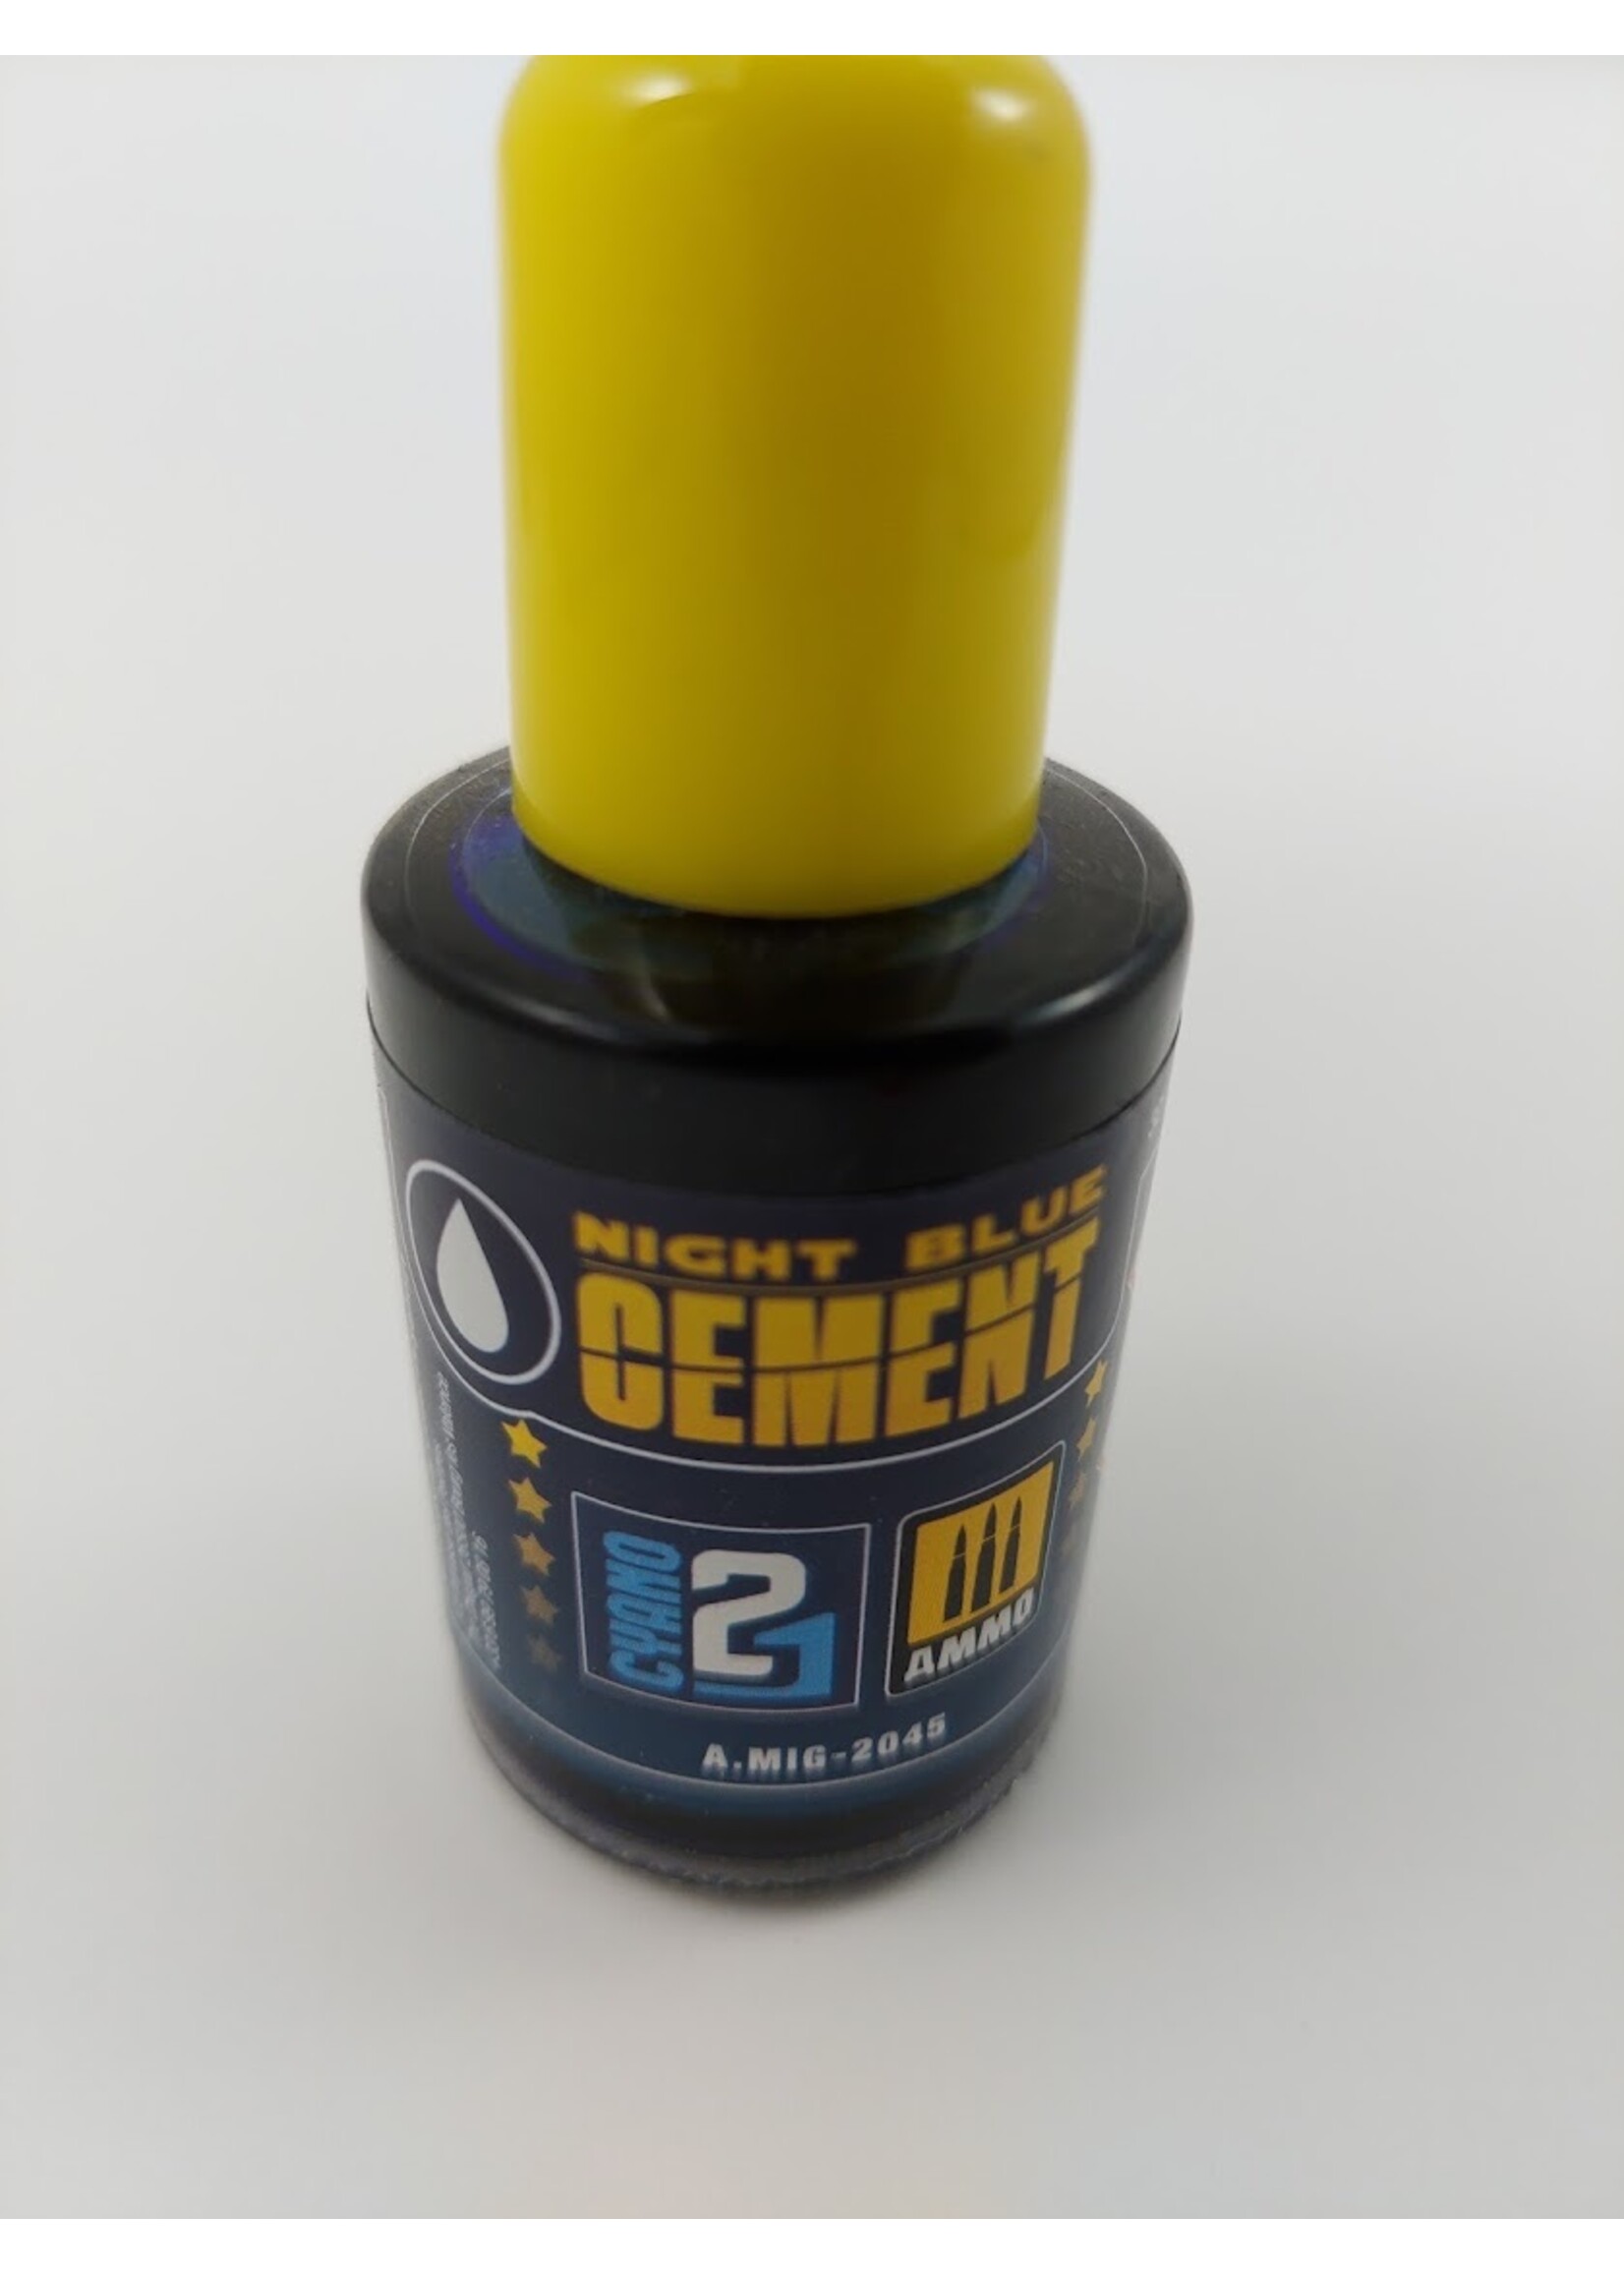 Extra thin cement - plastic glue - Blue